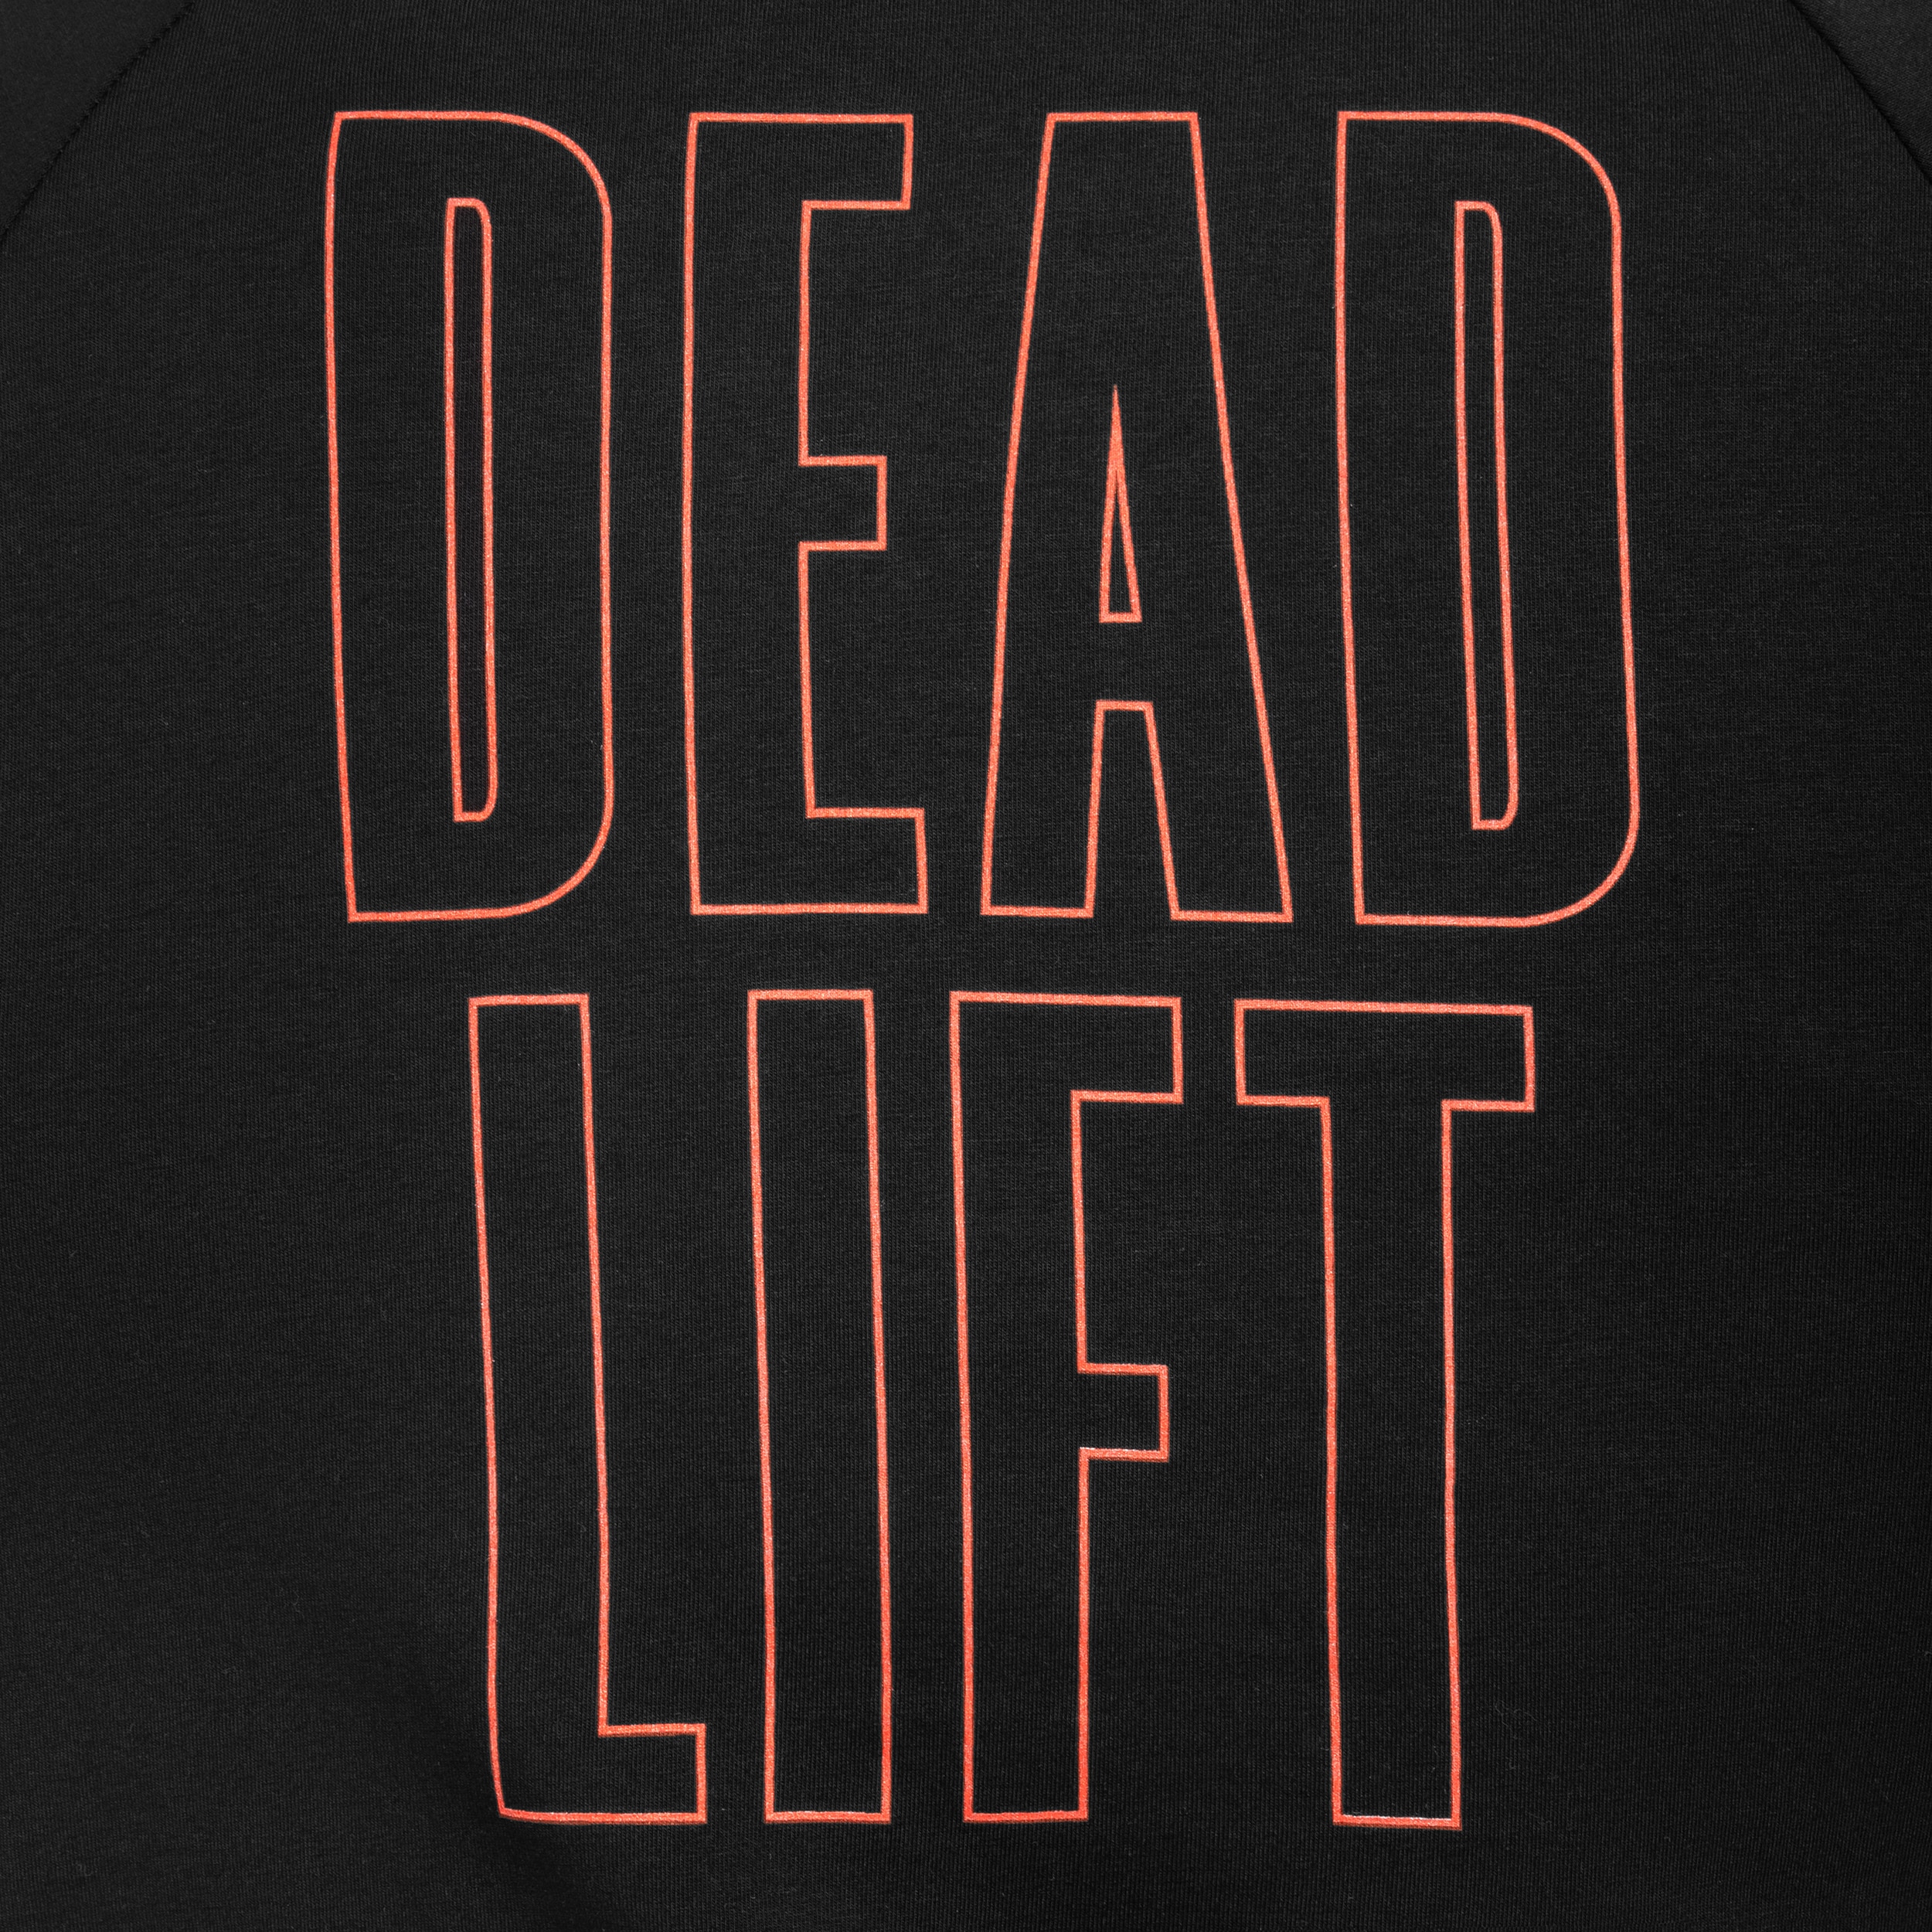 Koszulka T-shirt Thorn+Fit Heavy Metal Dead Lift - Black